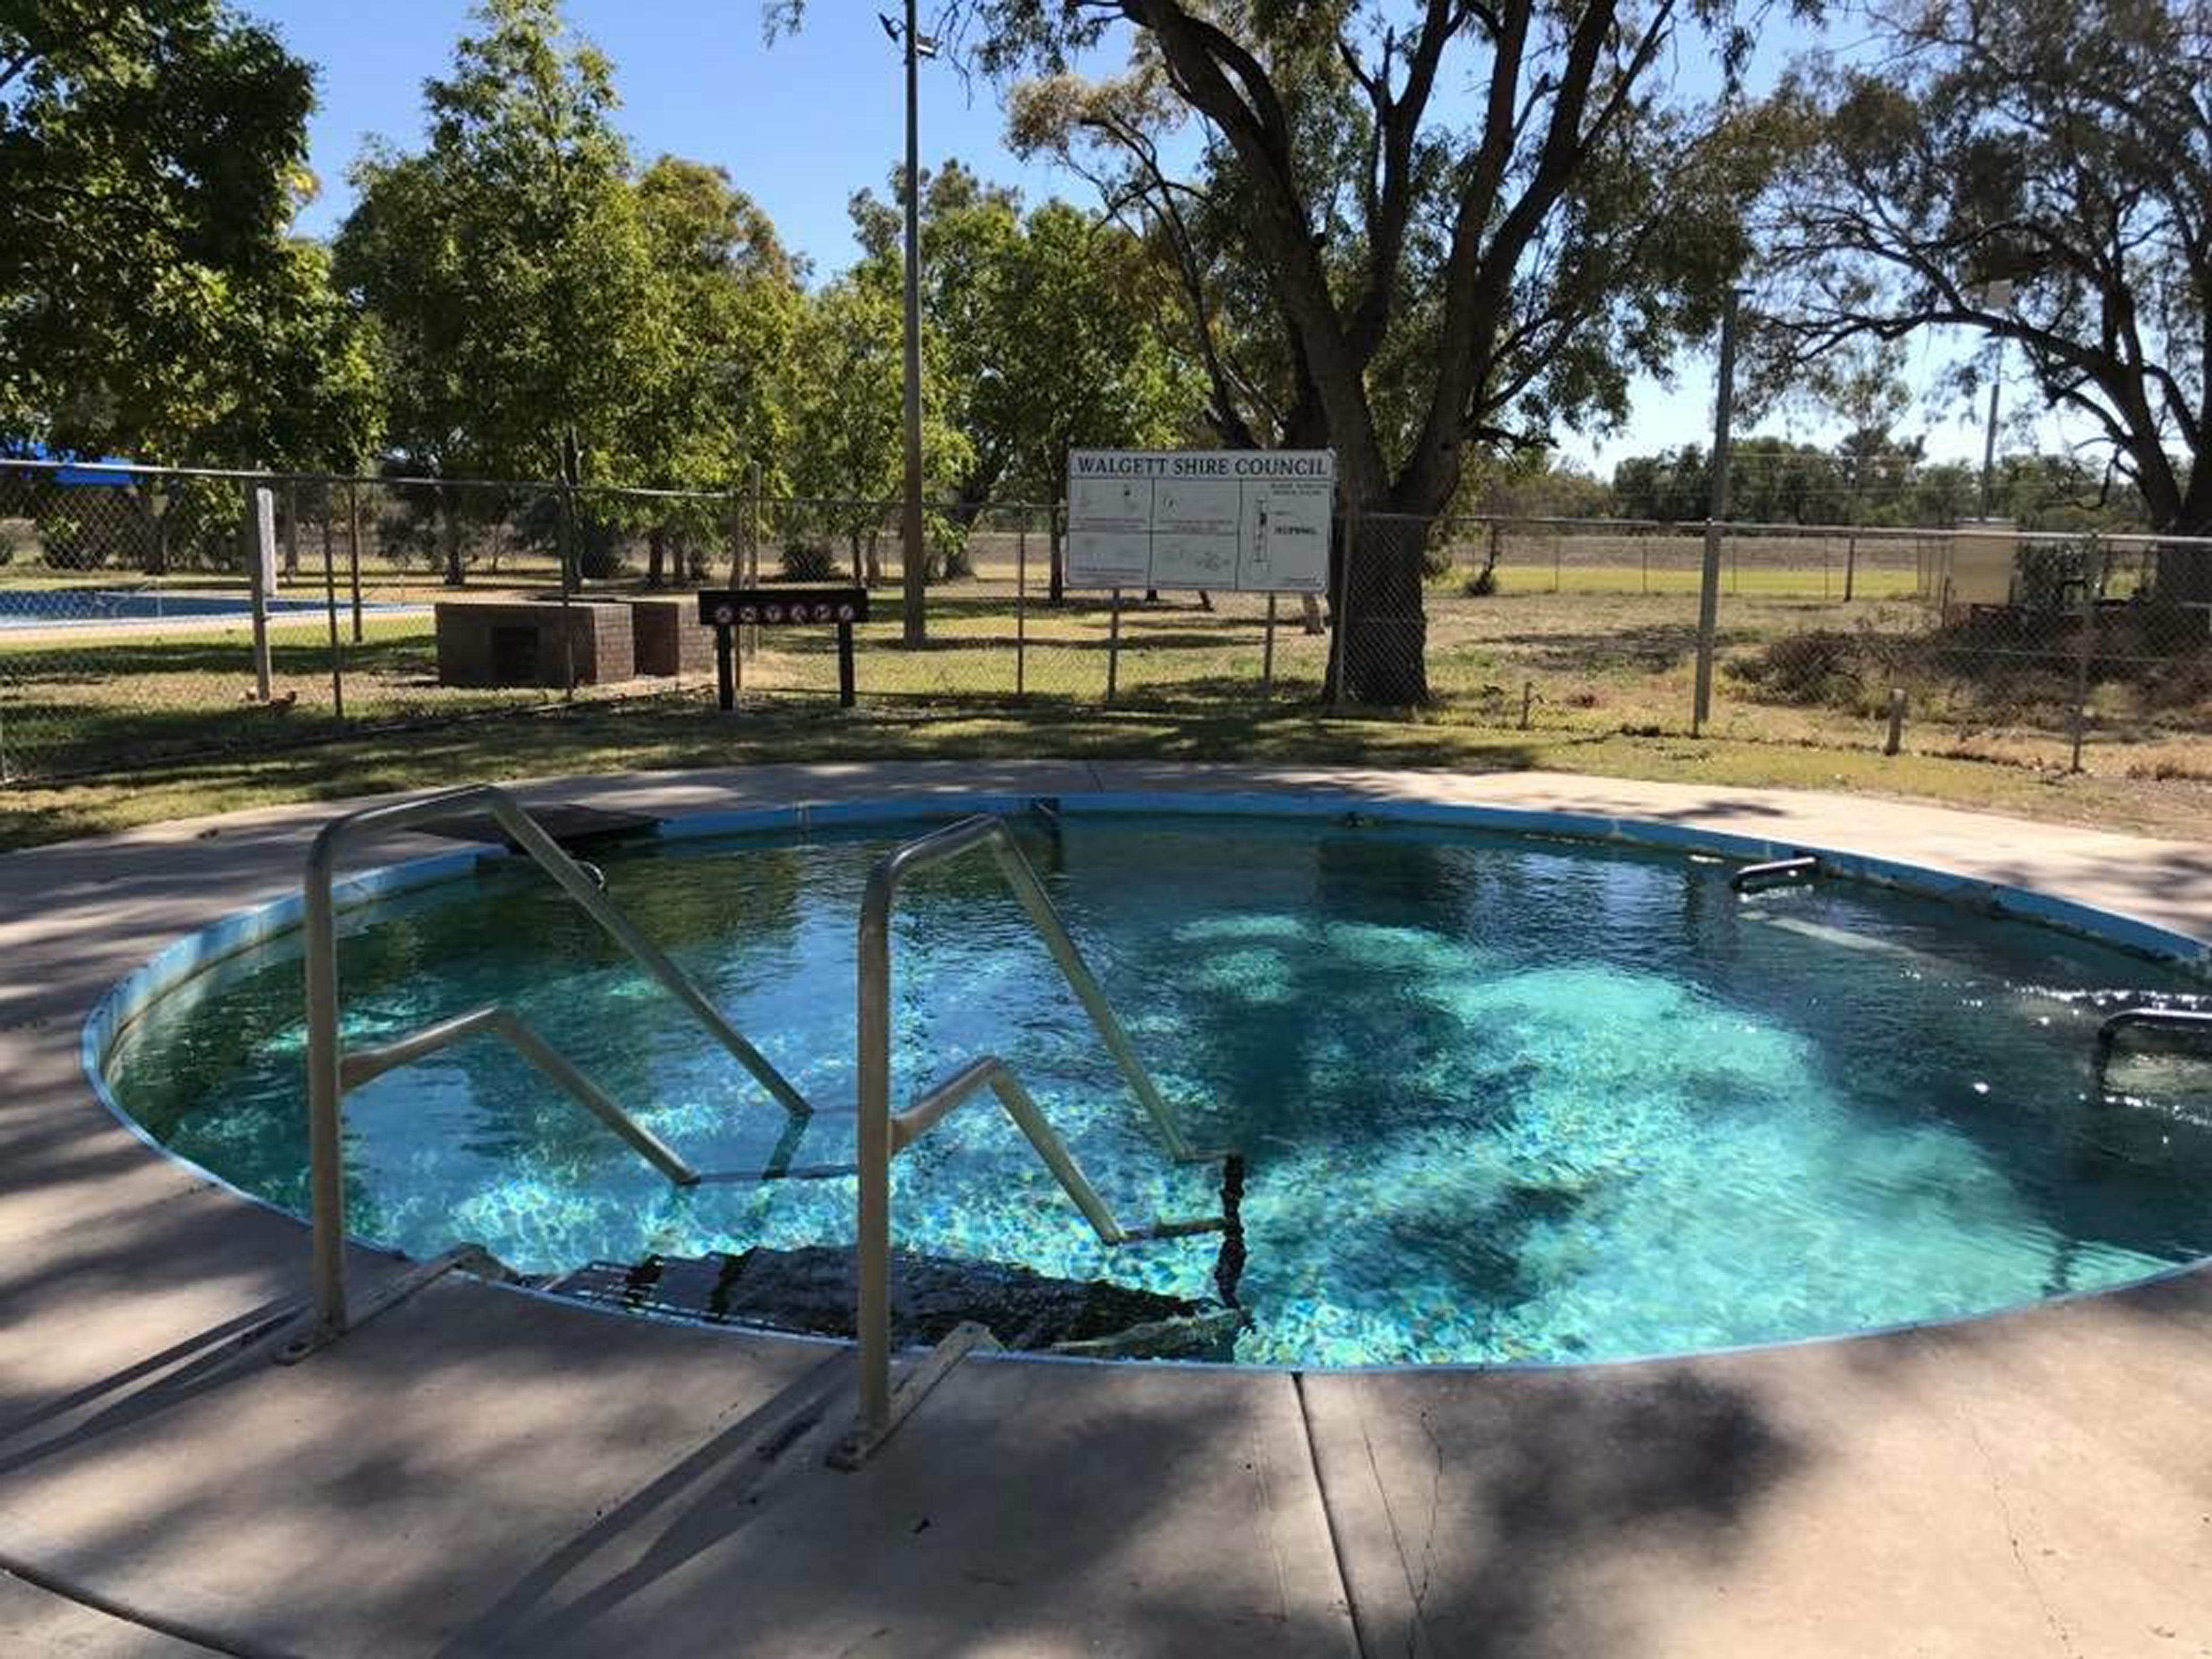 Walgett Artesian Bore Baths - Australia Accommodation